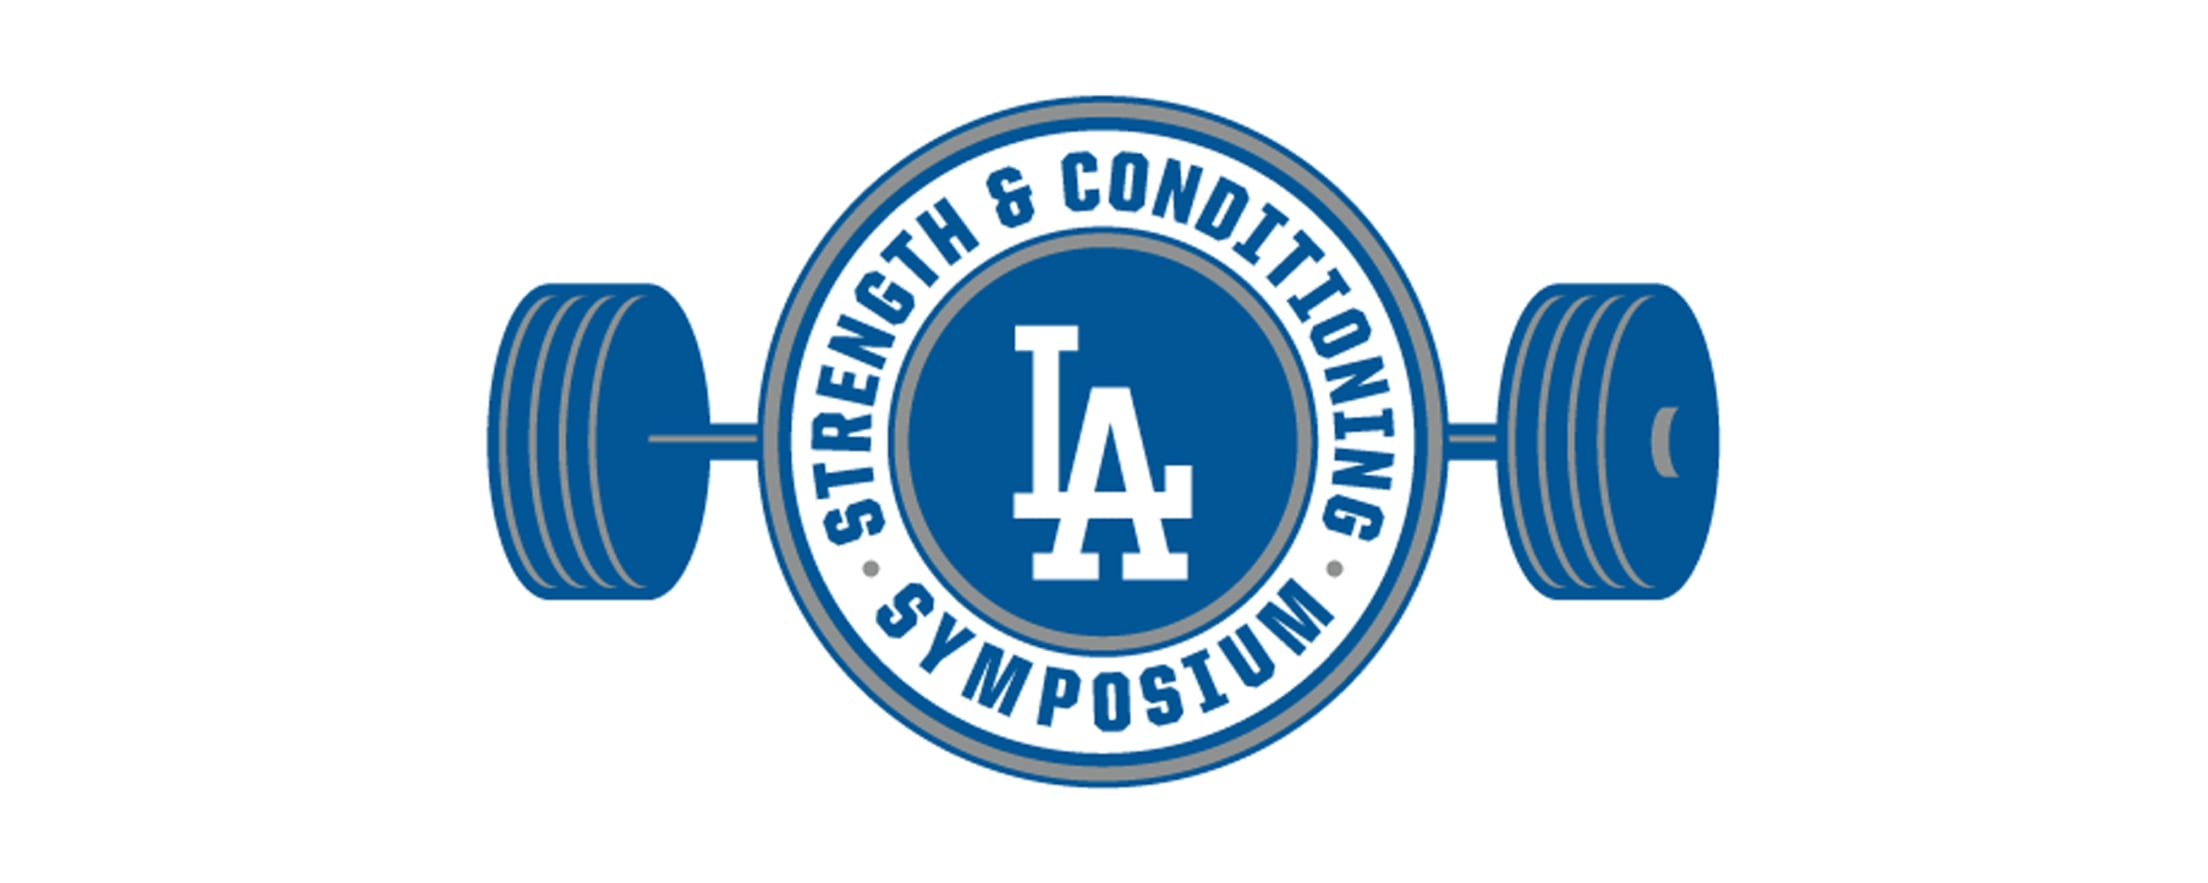 MLB Los Angeles Dodgers - City Connect Men's Sport Cut Jersey SM